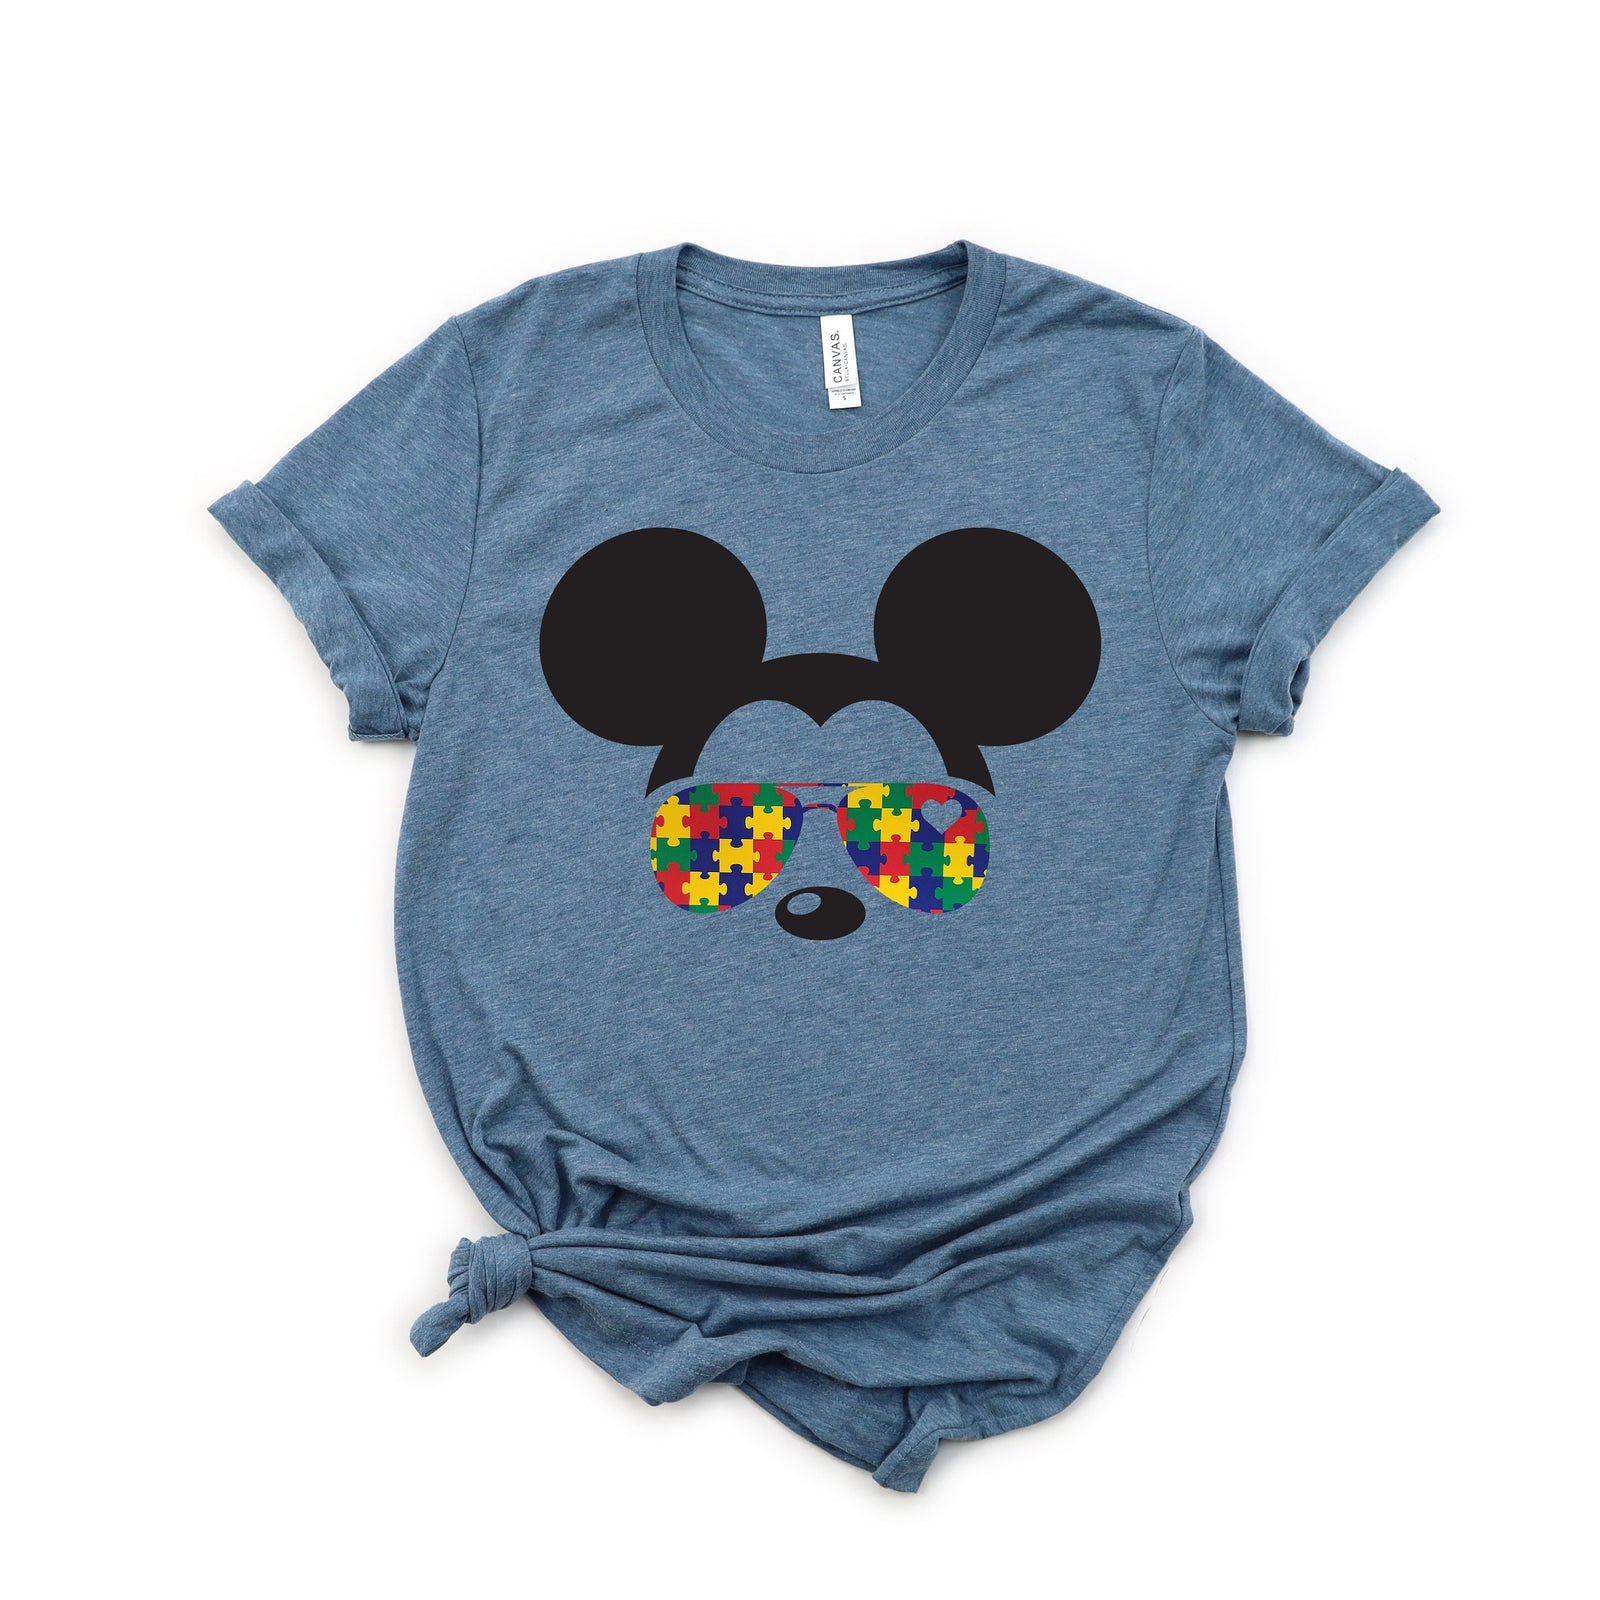 Mickey Mouse Adult Unisex T Shirt - Aviators - Puzzle Piece Sunglasses - Autism Awareness Shirt